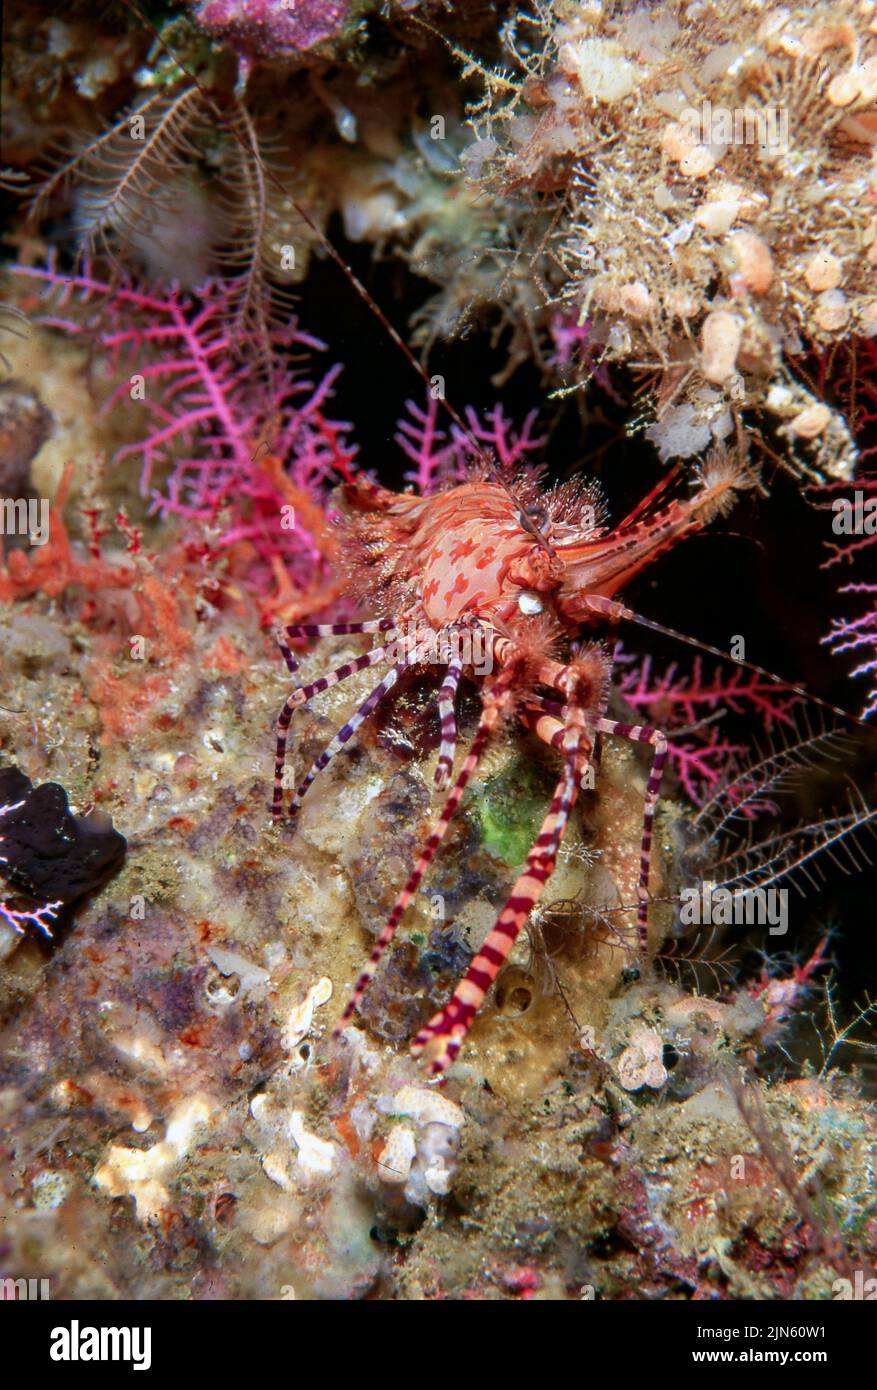 Marbled shrimp (Saron sp., possible S. marmoratus) from Bunaken, North Sulawesi, Indonesia. Stock Photo